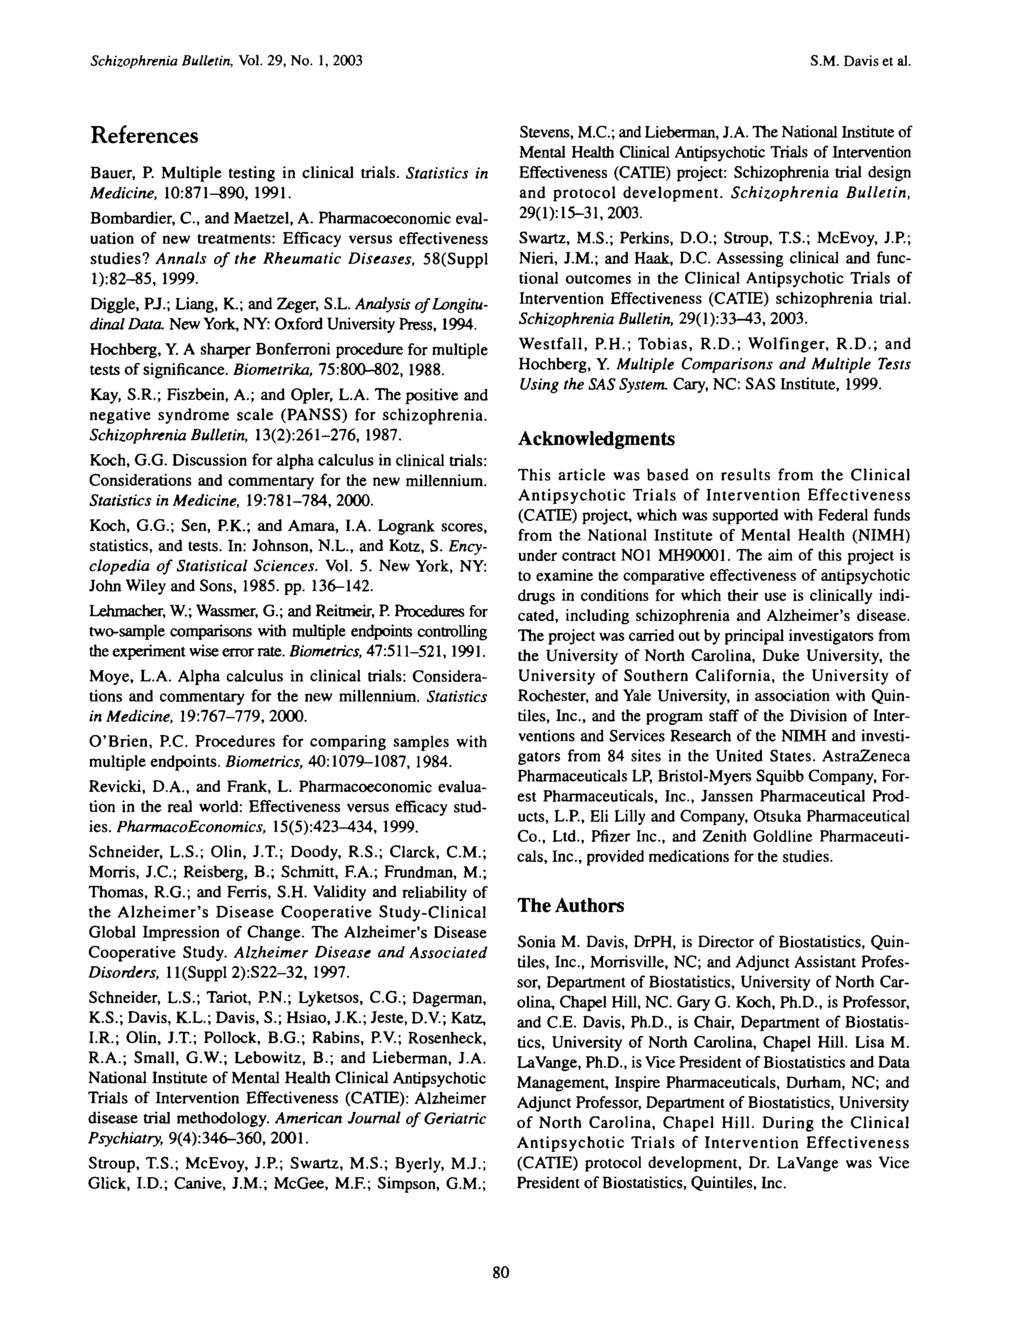 Schizophrenia Bulletin, Vol. 29, No. 1, 2003 S.M. Davis et al. References Bauer, P. Multiple testing in clinical trials. Statistics in Medicine, 10:871-890, 1991. Bombardier, C, and Maetzel, A.